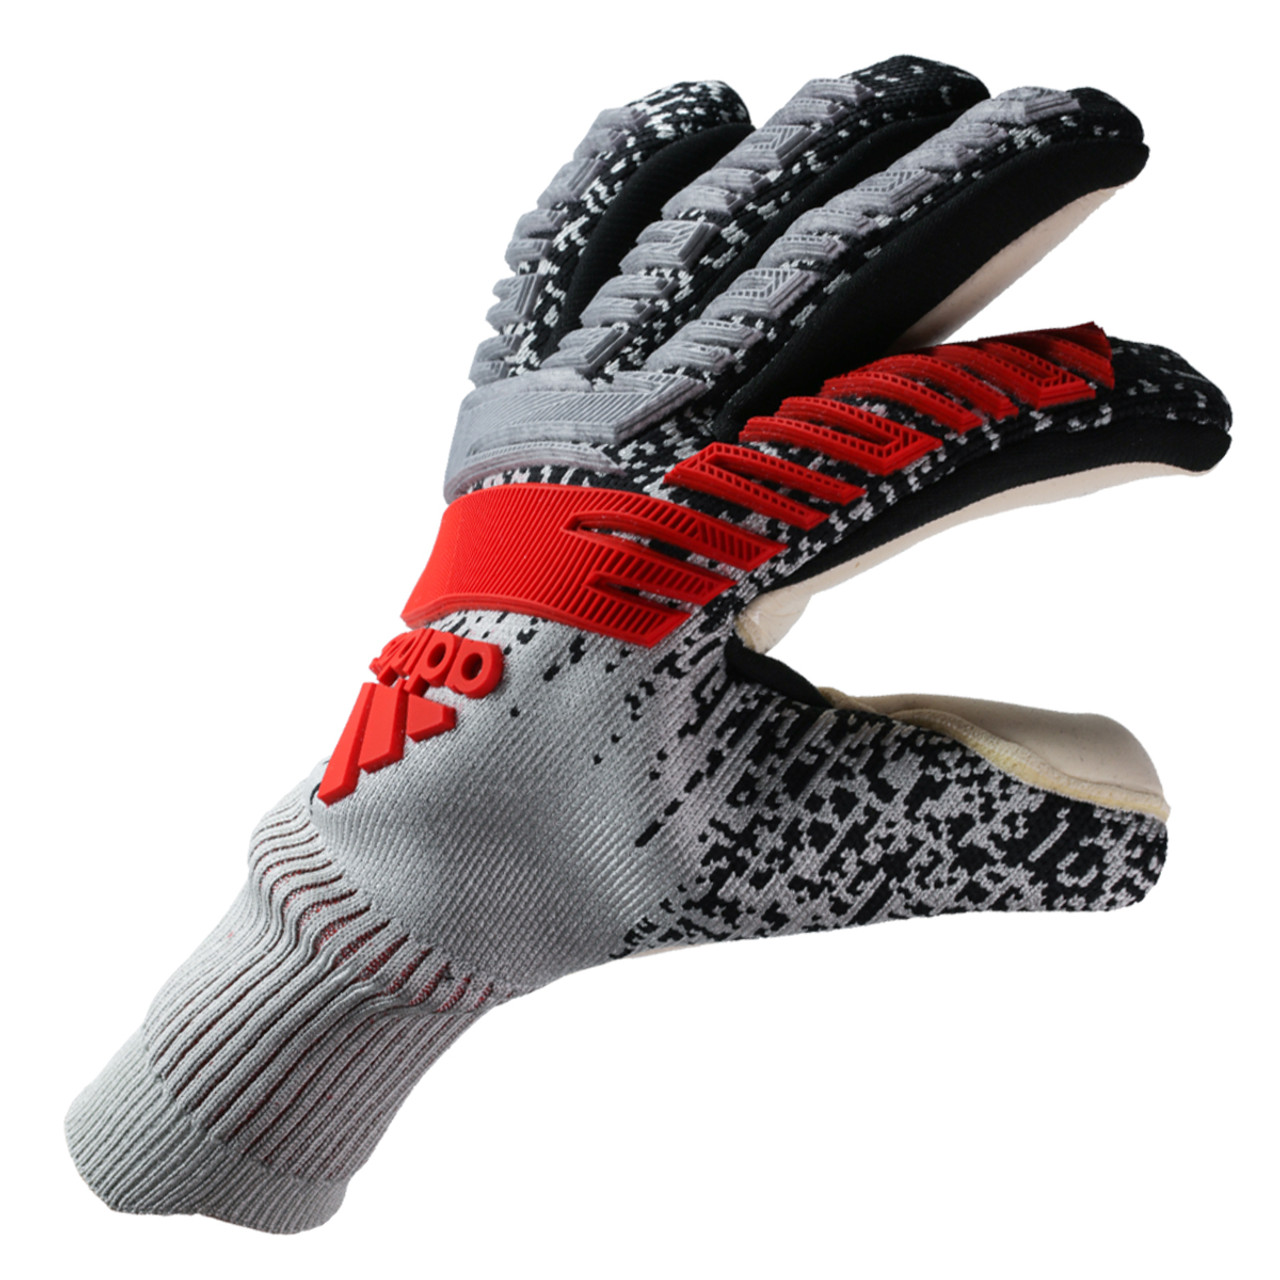 Adidas Predator Pro FS PC Soccer Goalkeeper Gloves DY2635 - Silver, Black,  Red - everysportforless.com